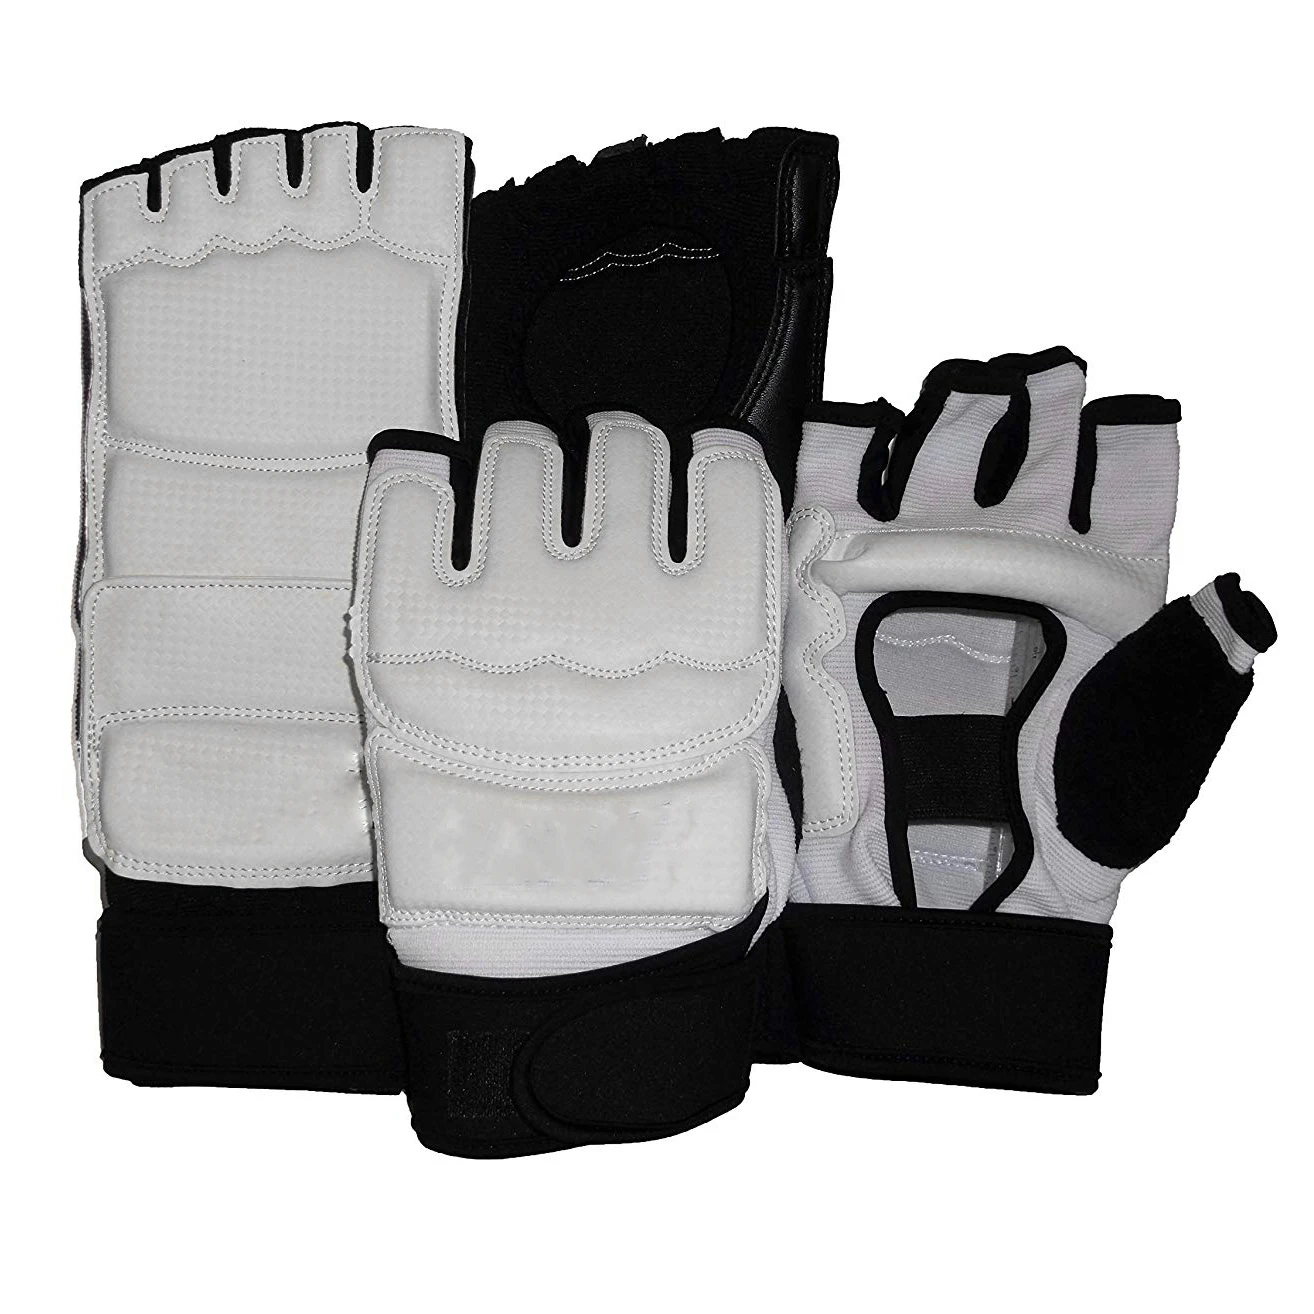 Taekwondo Gloves Martial Arts Hand Protector Sparring Training Gear XS-XL White 